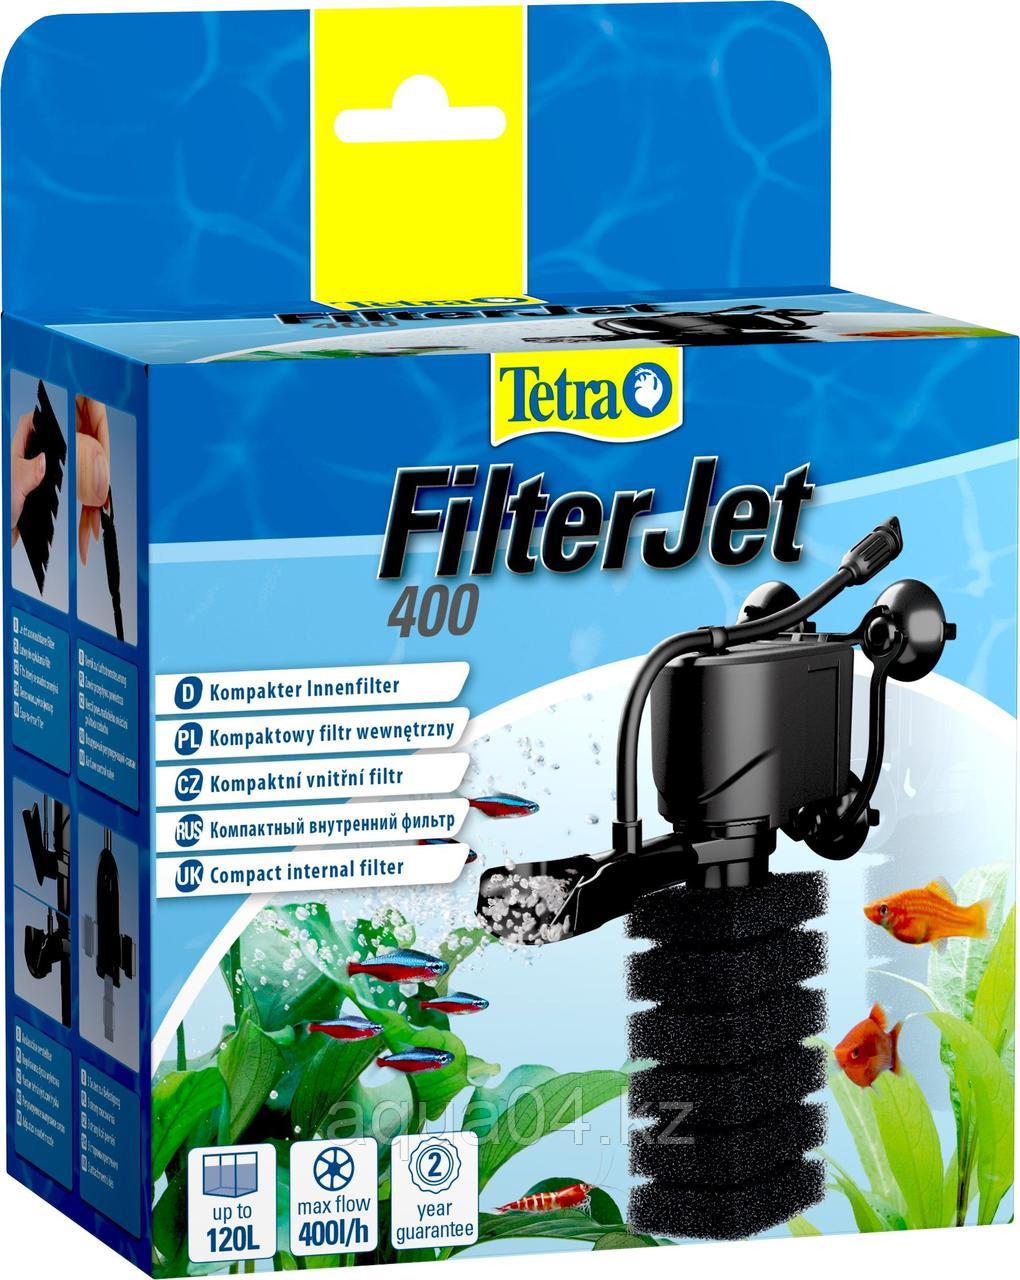 Tetra FilterJet 400, фото 1